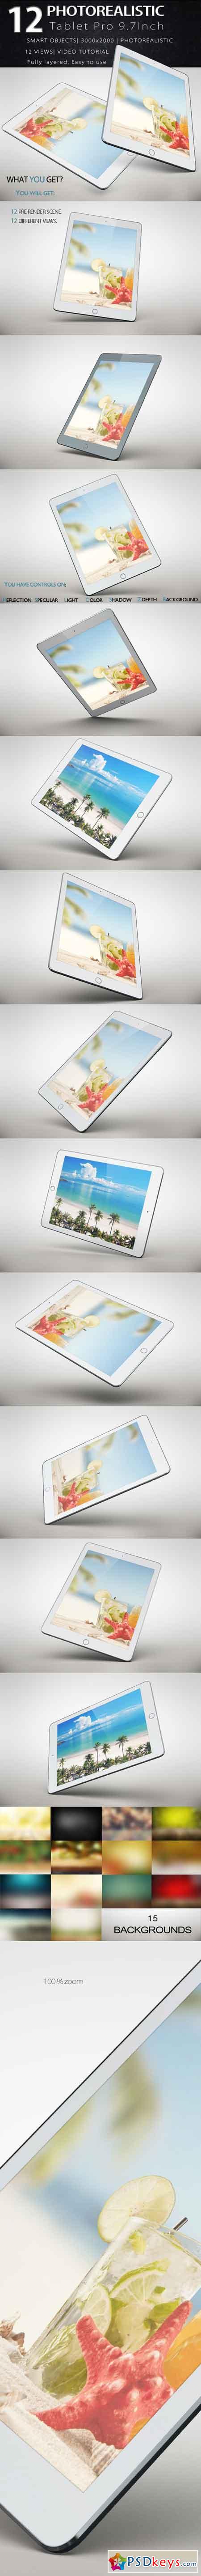 Bundle iPad Pro 9.7 Inch 2016 Mockup 627115